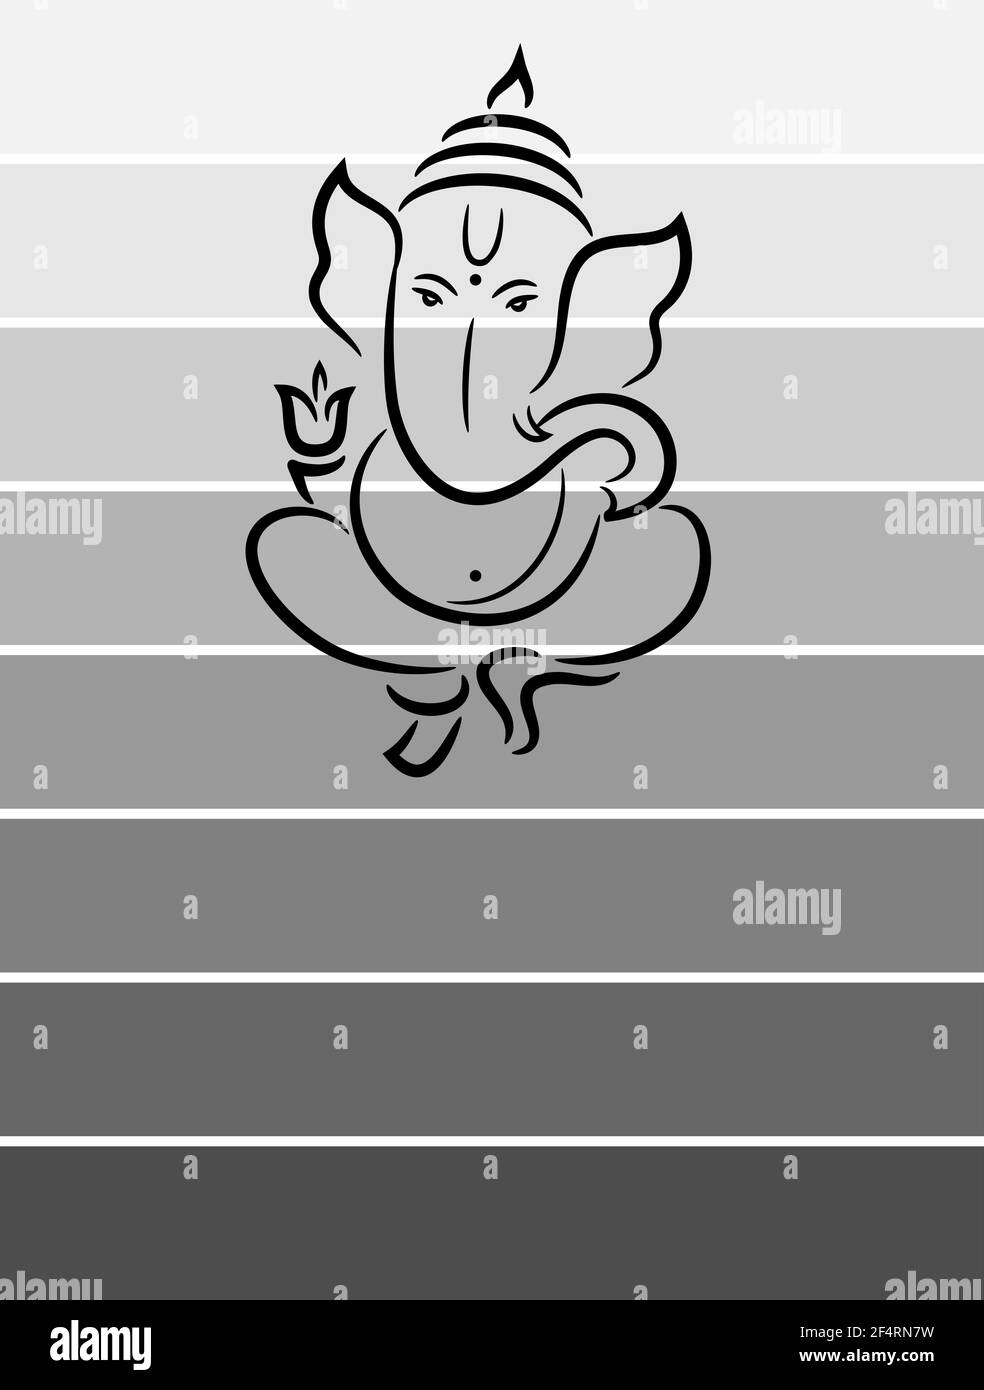 Ganesha The Lord Of Wisdom Vector Illustration Stock Vector